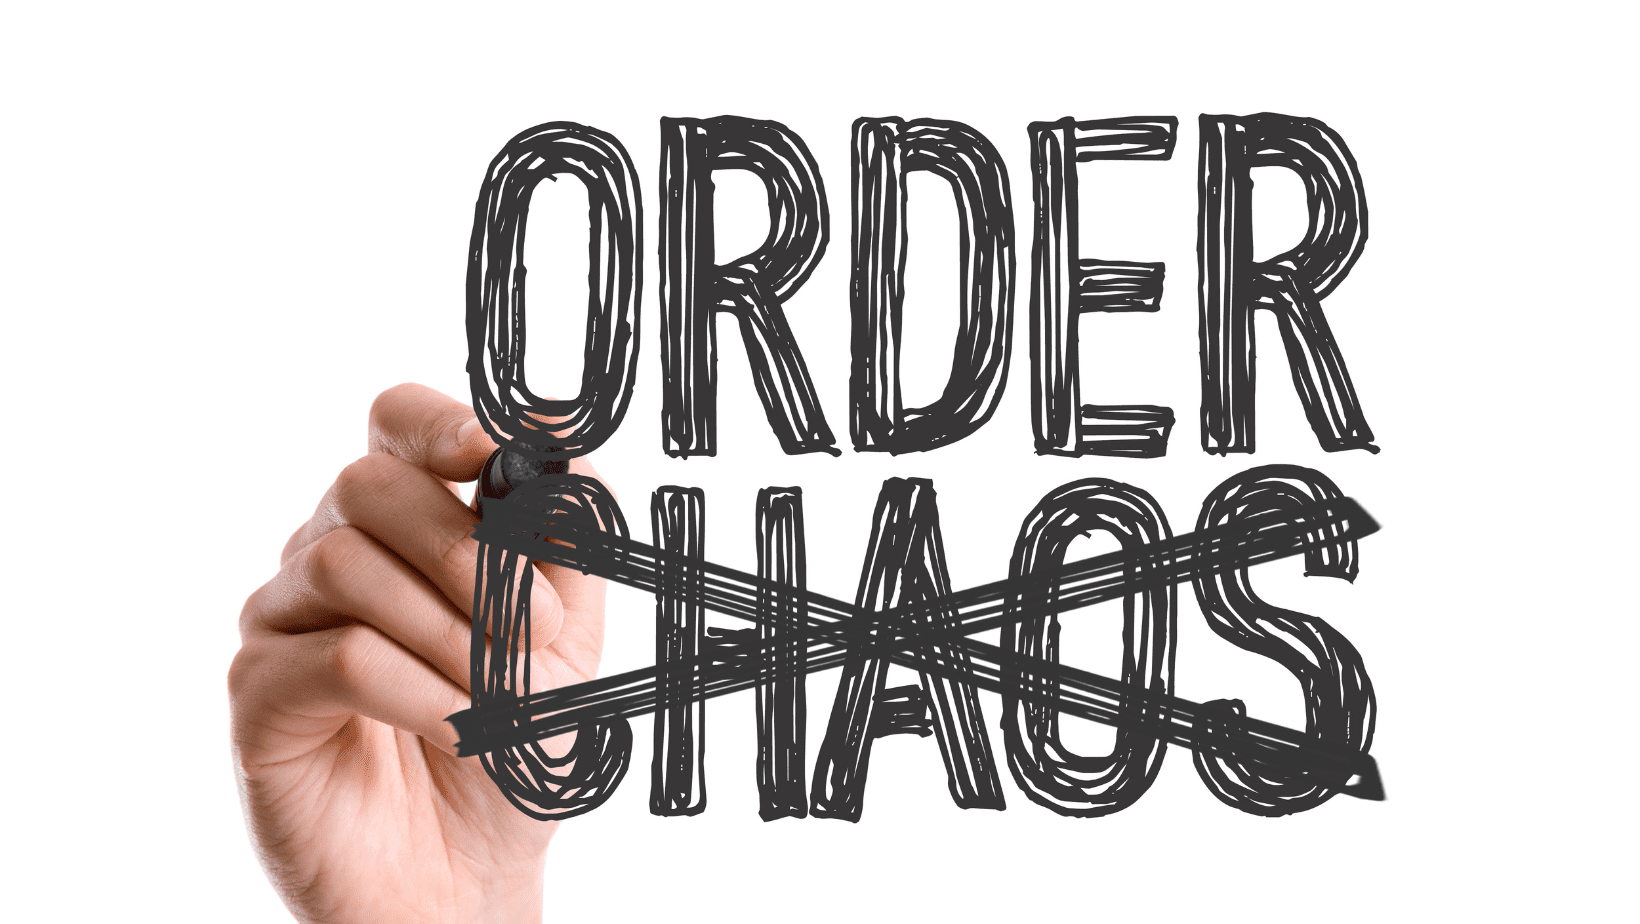 order